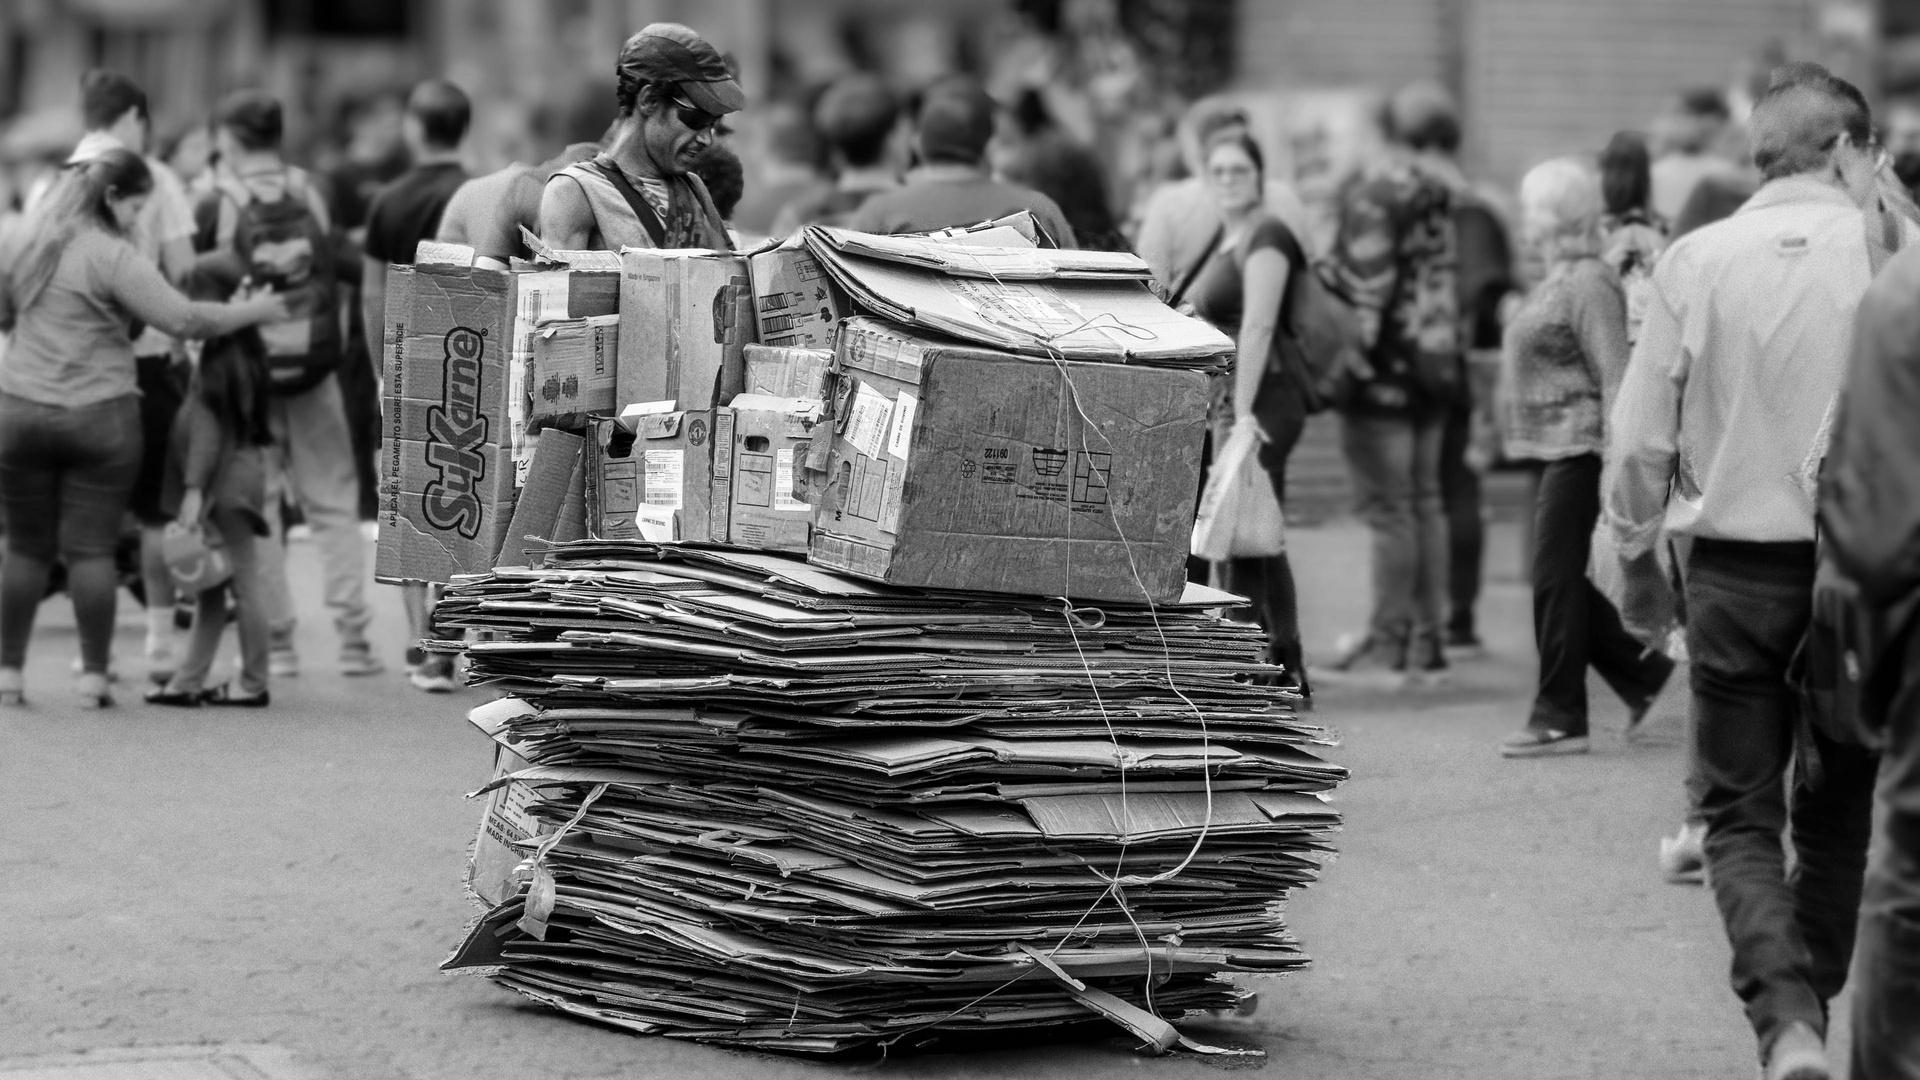 Der Pappsammler / The cardboard collector